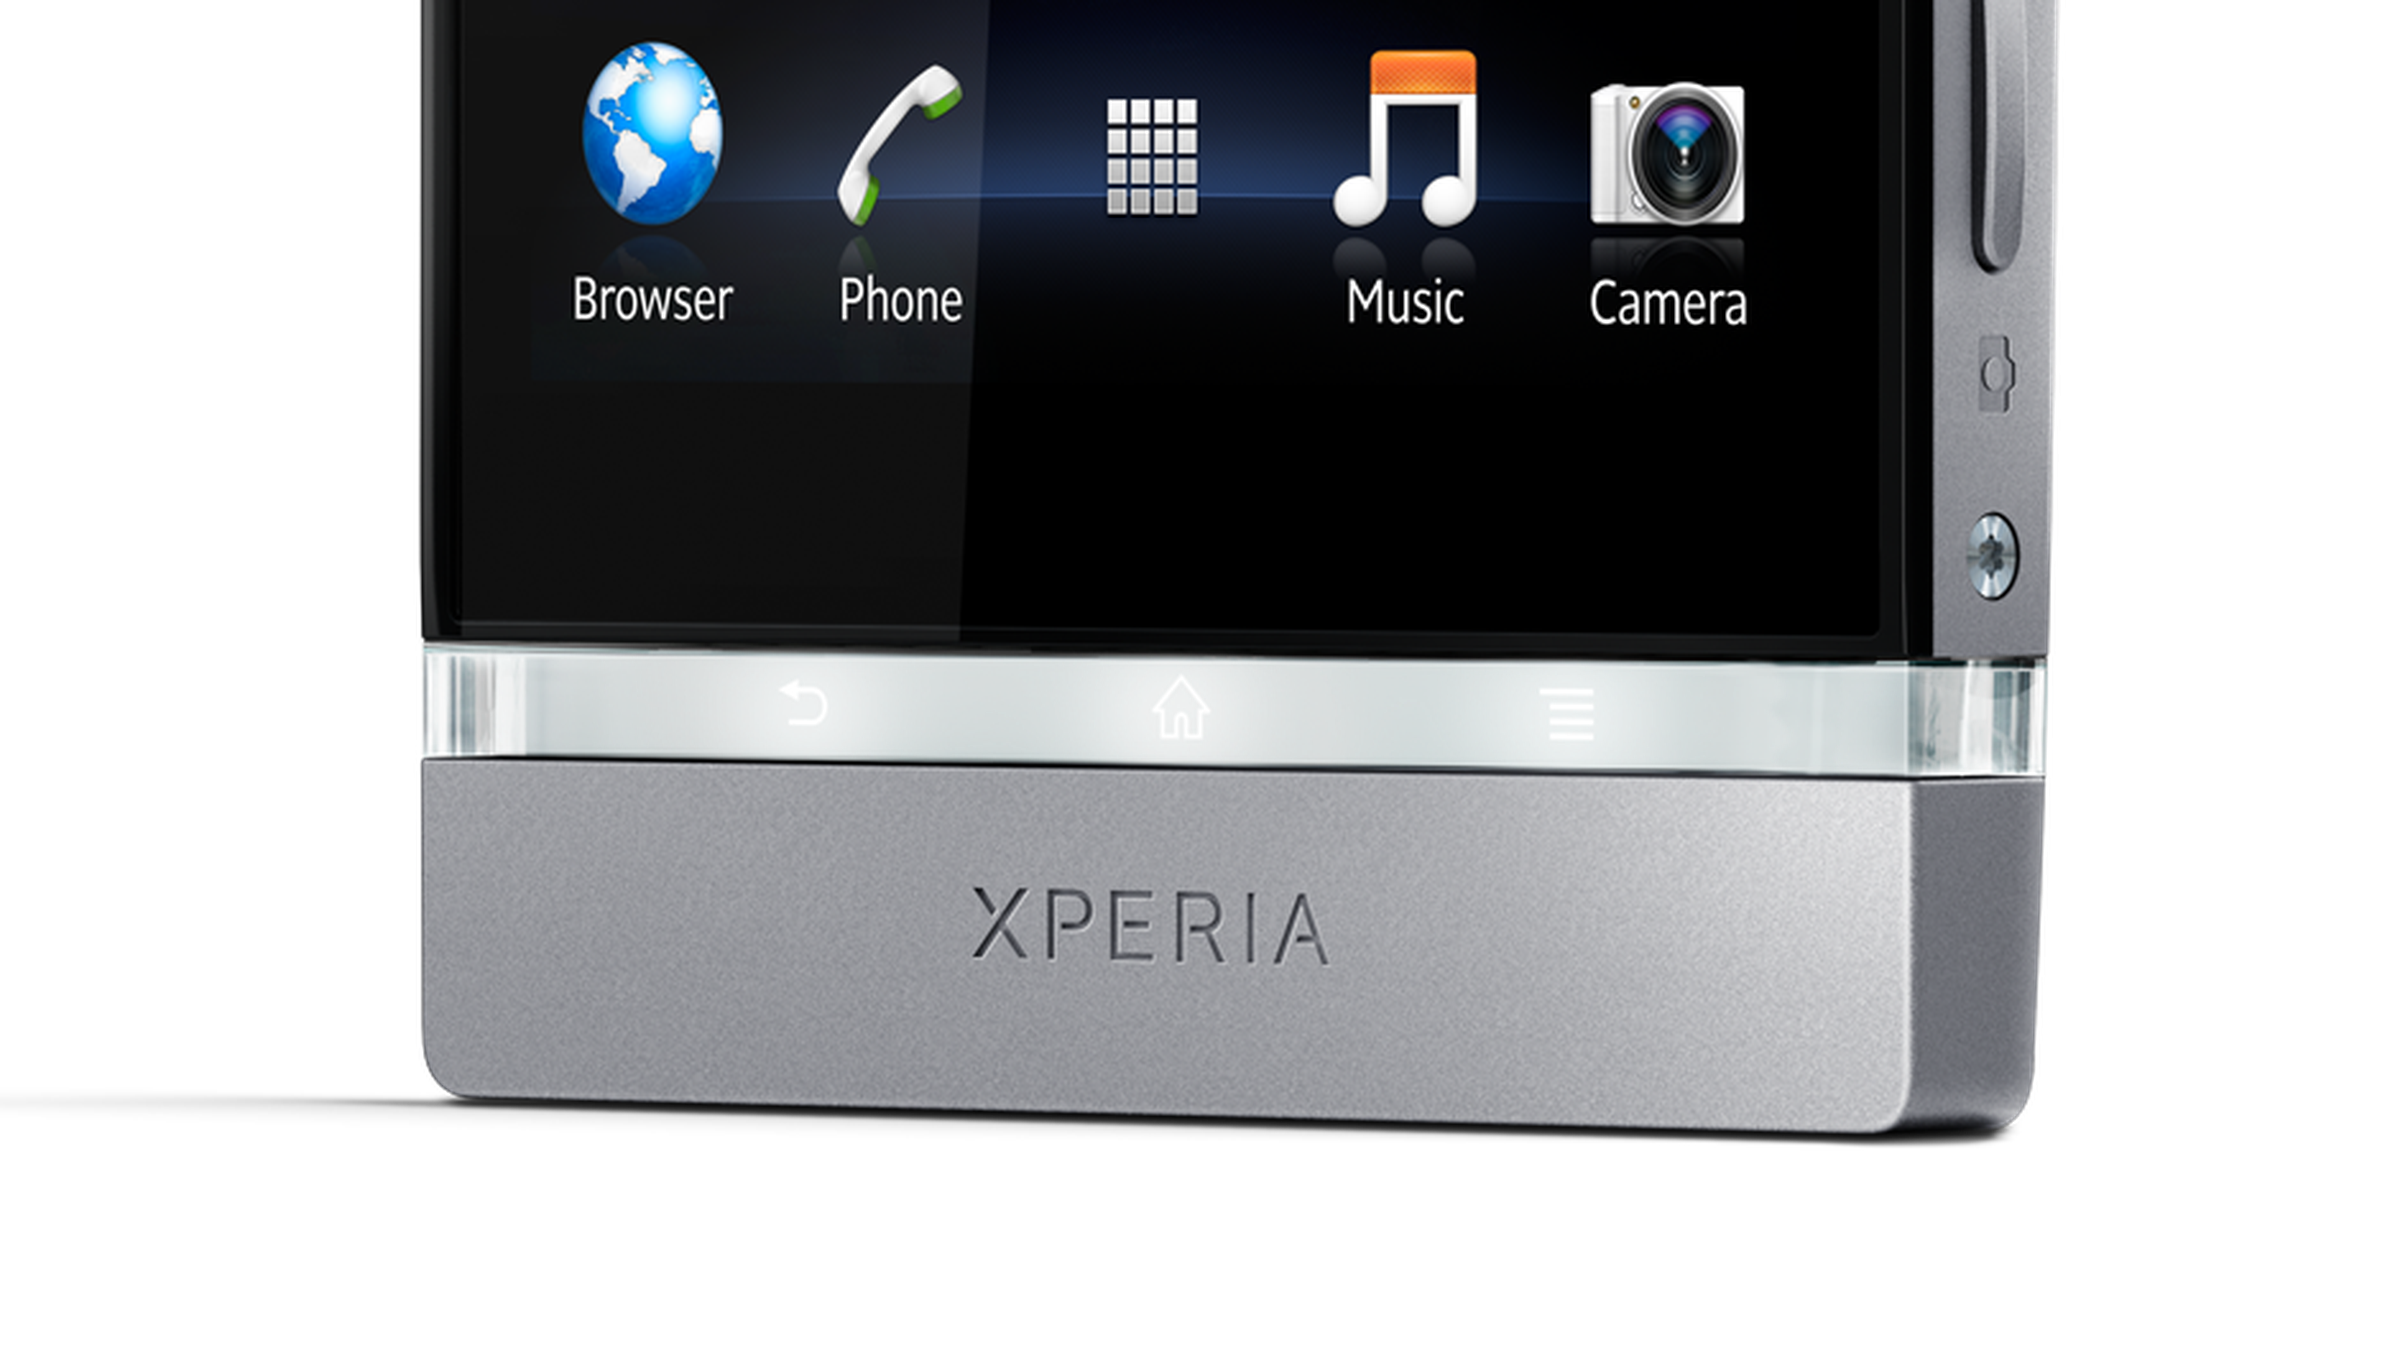 Sony Xperia P announcement photos